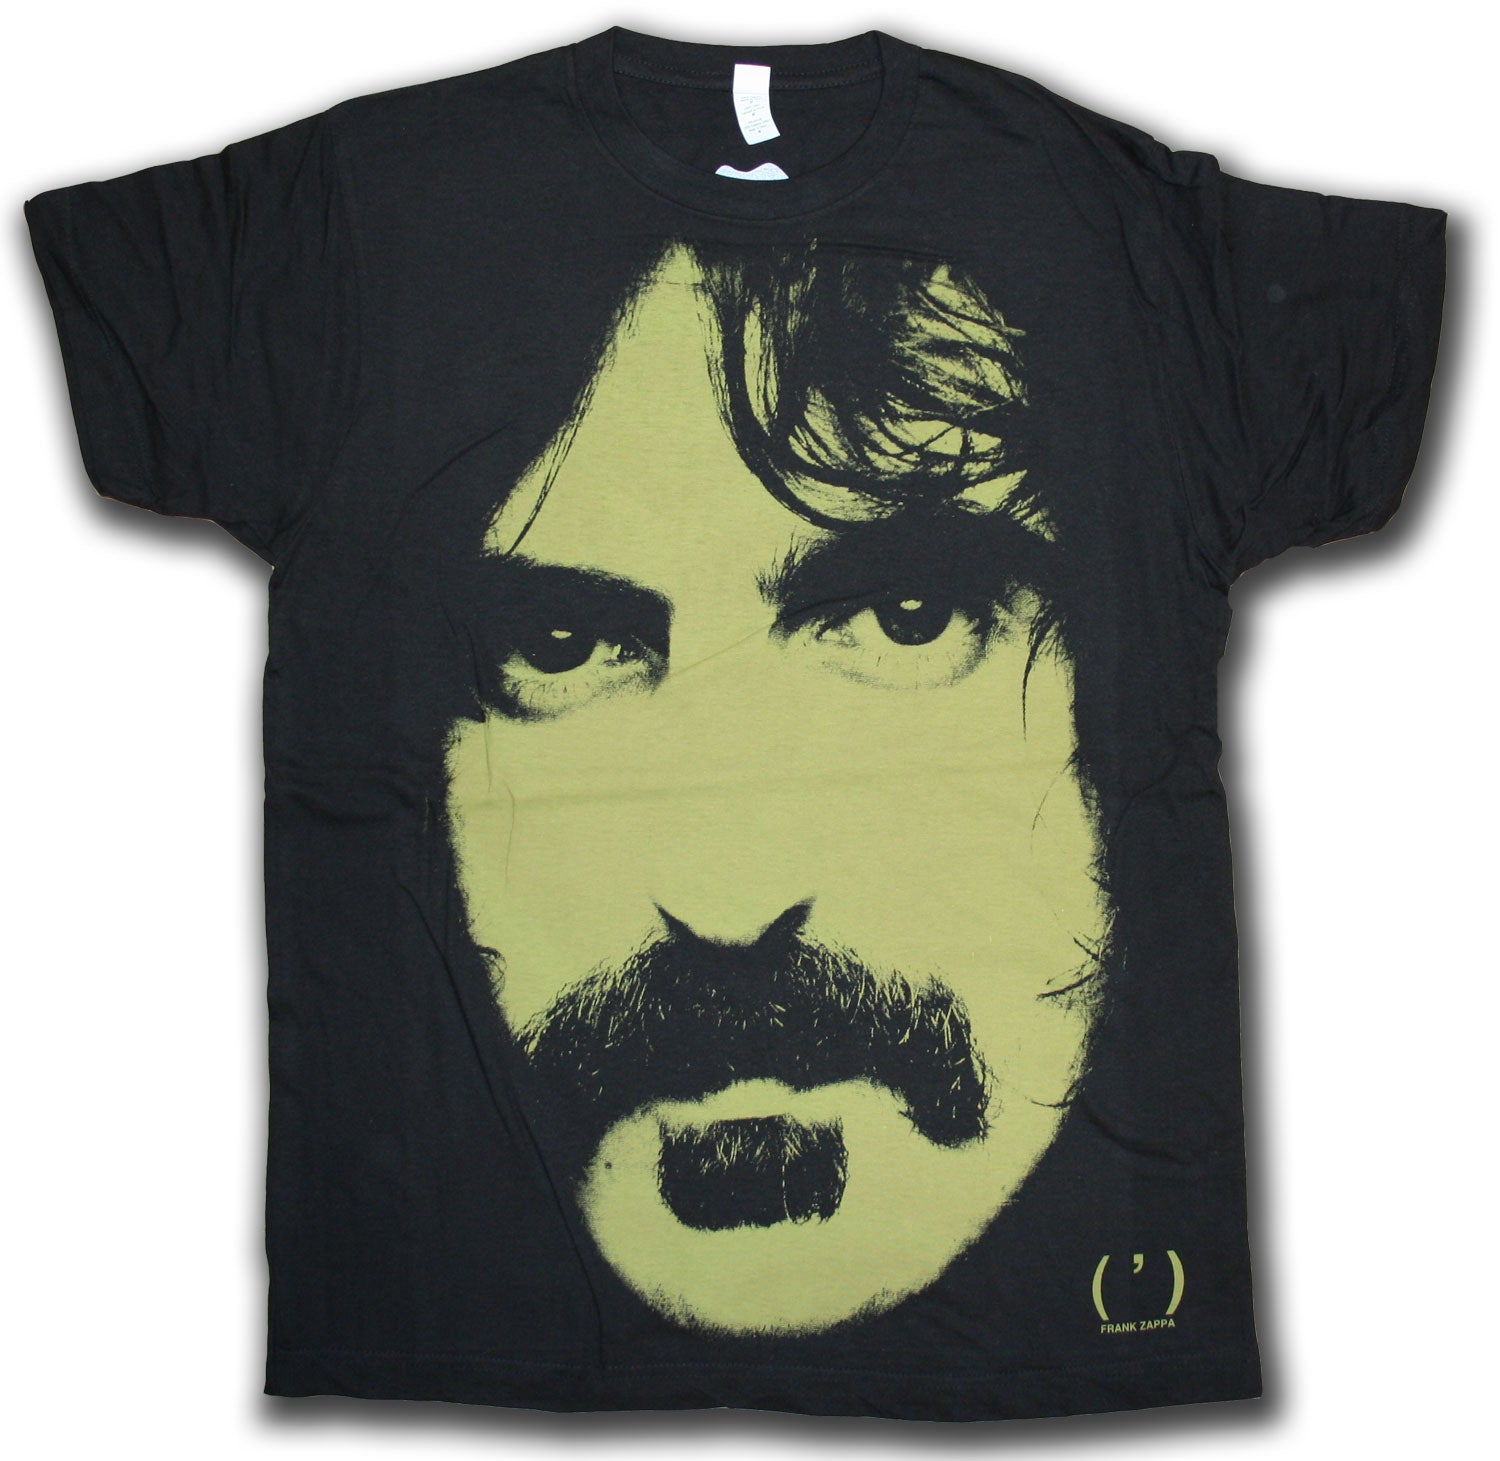 Frank Zappa T shirt - Apostrophe